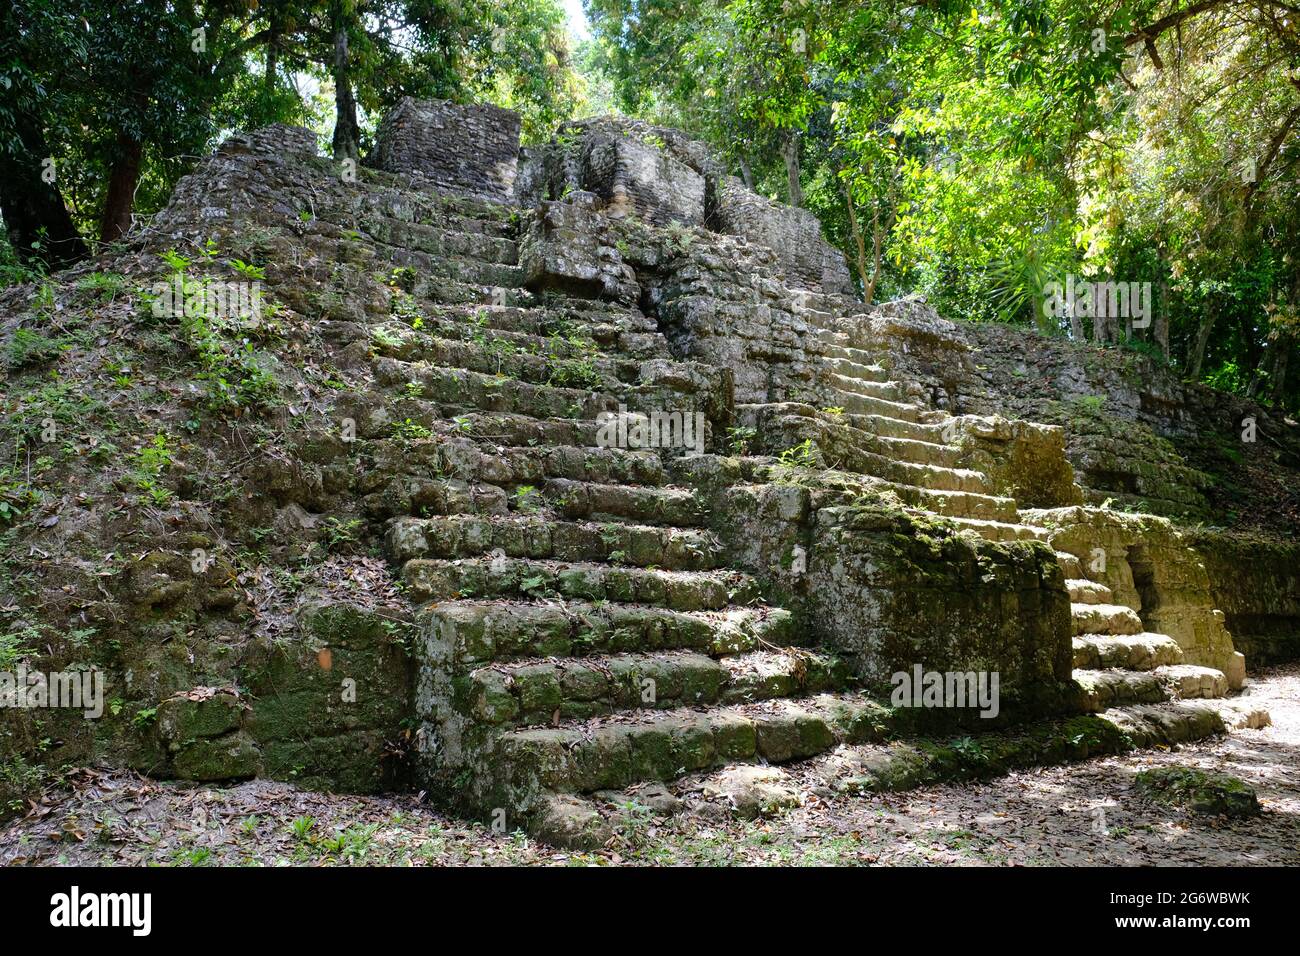 Guatemala Tikal National Park - Ruine in Palacio de las Acanaladuras area Stock Photo